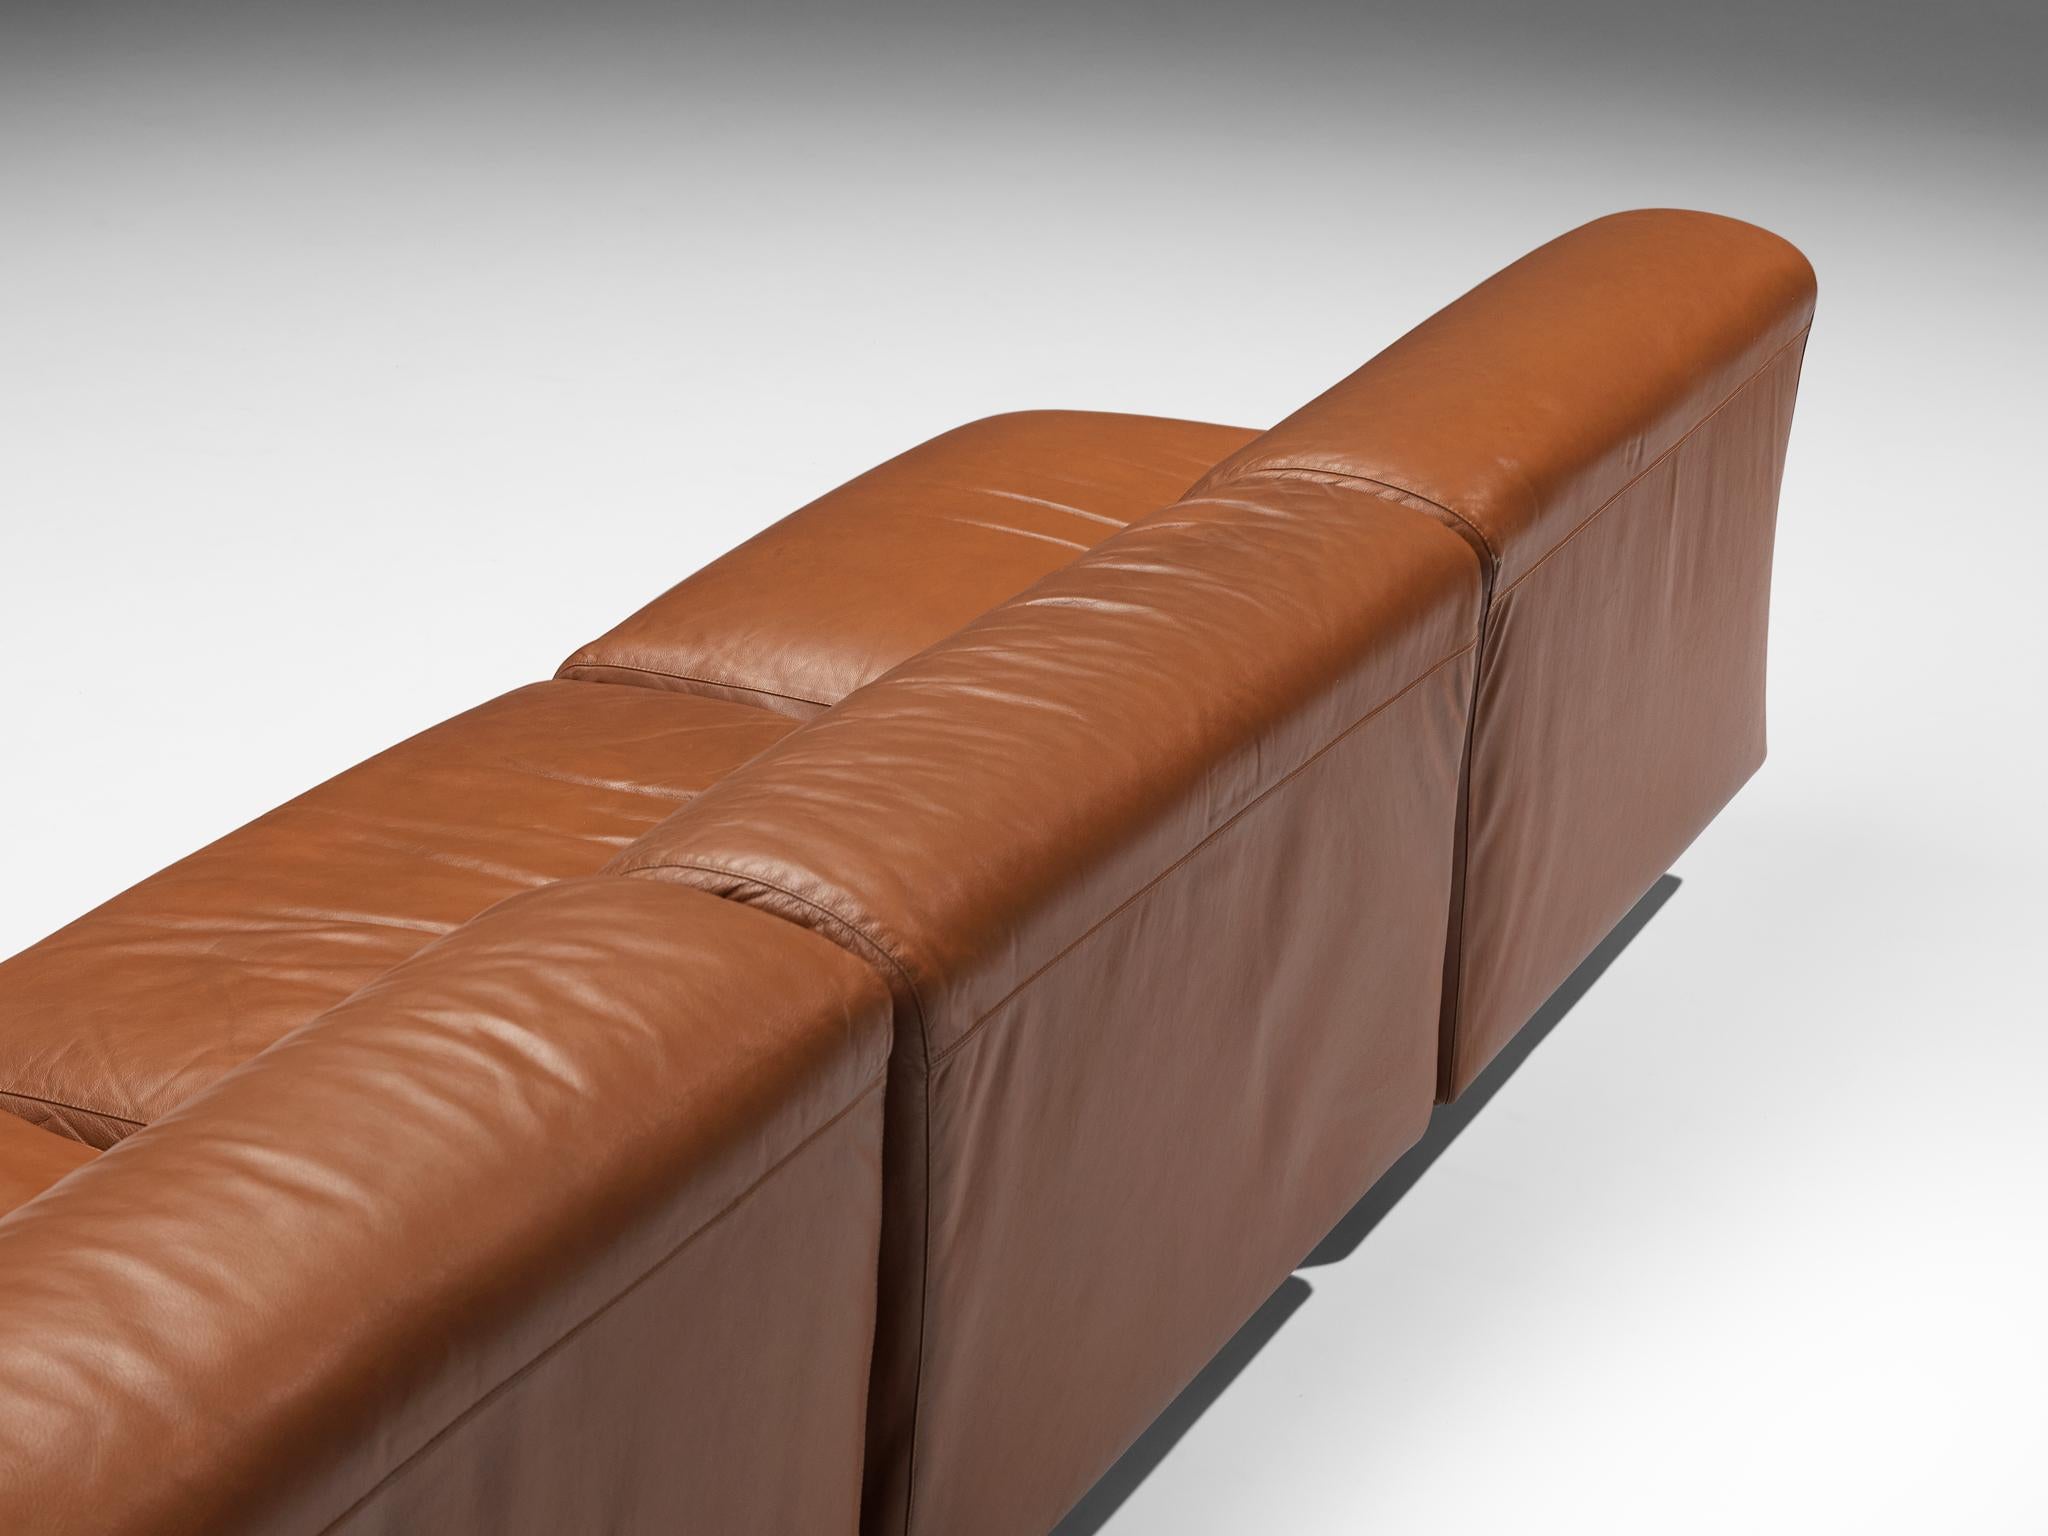 Vico Magistretti for Cassina 'Fiandra' Modular Sofa in Brown Leather In Good Condition For Sale In Waalwijk, NL